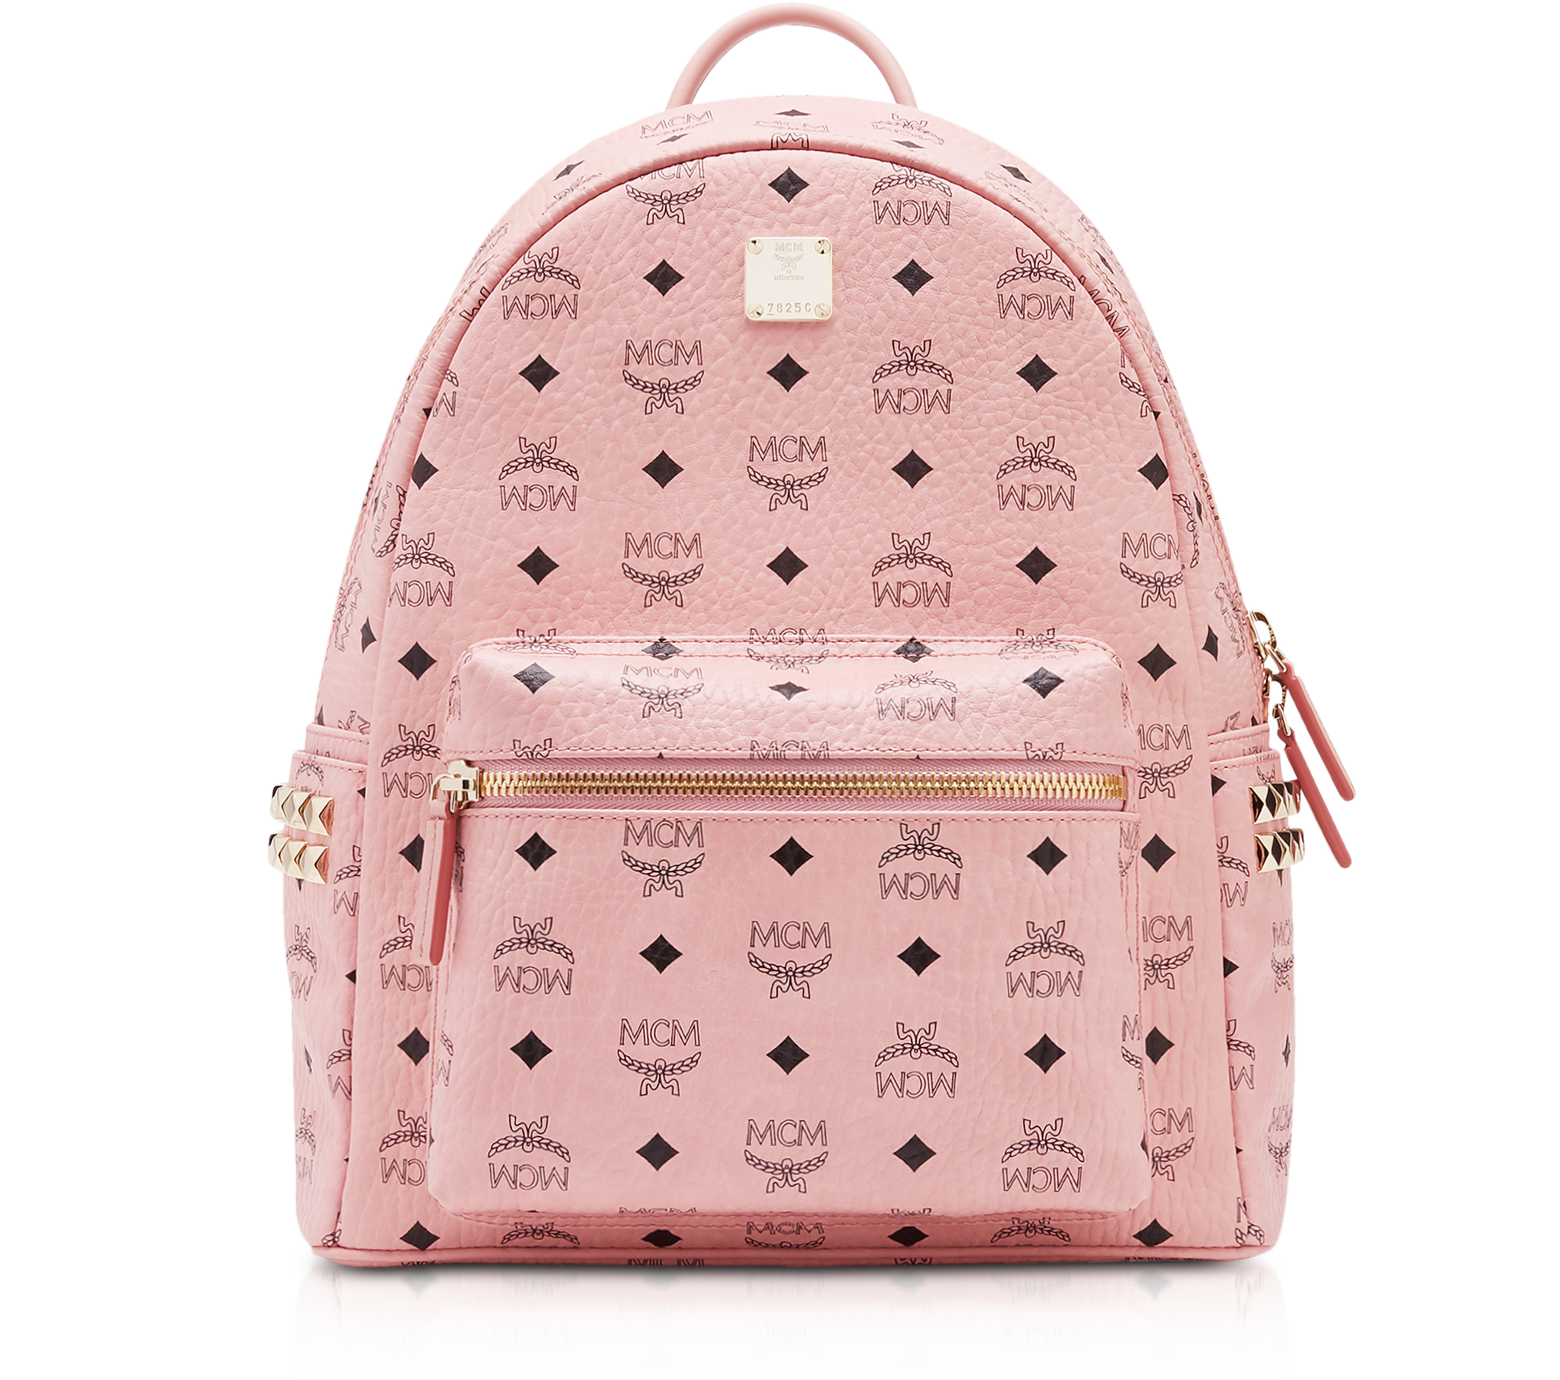 MCM Mini Stark Backpack in Pink